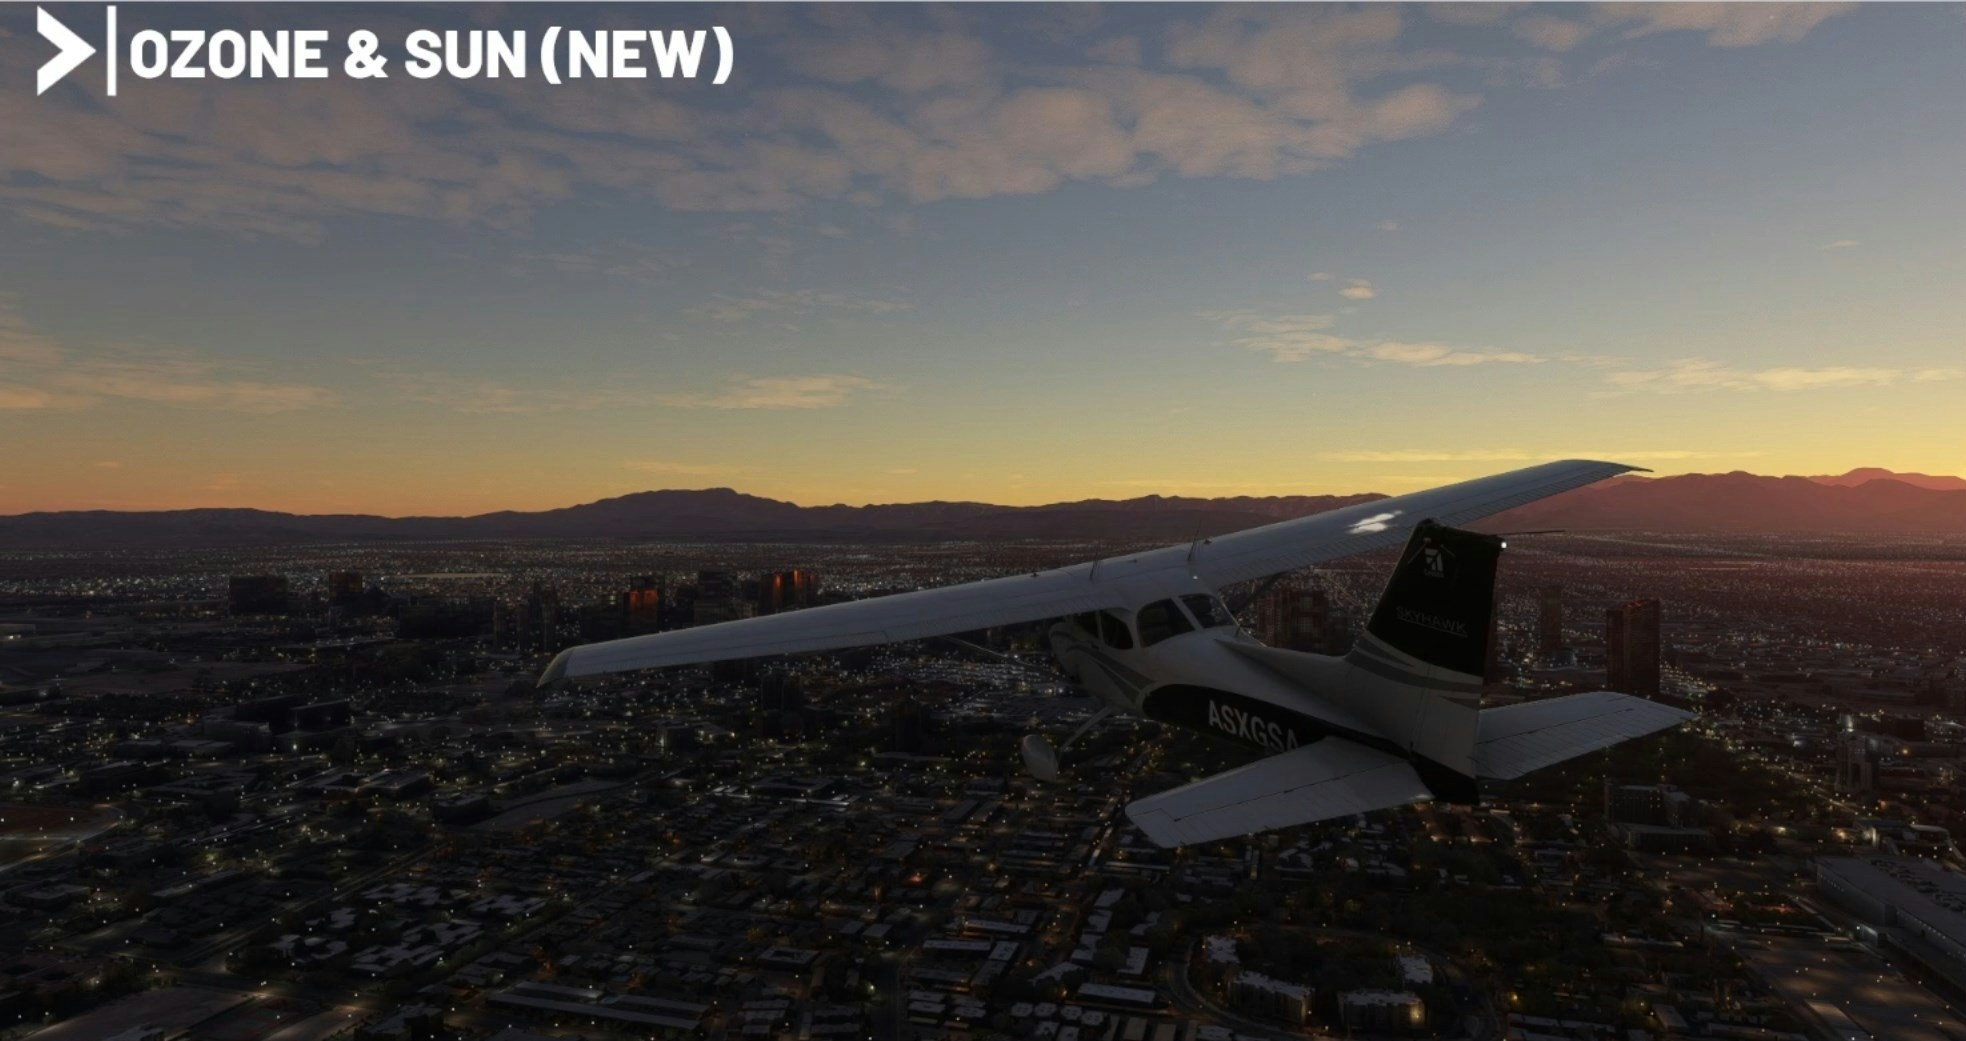 Microsoft Flight Simulator Sim Update 14 is Now Available